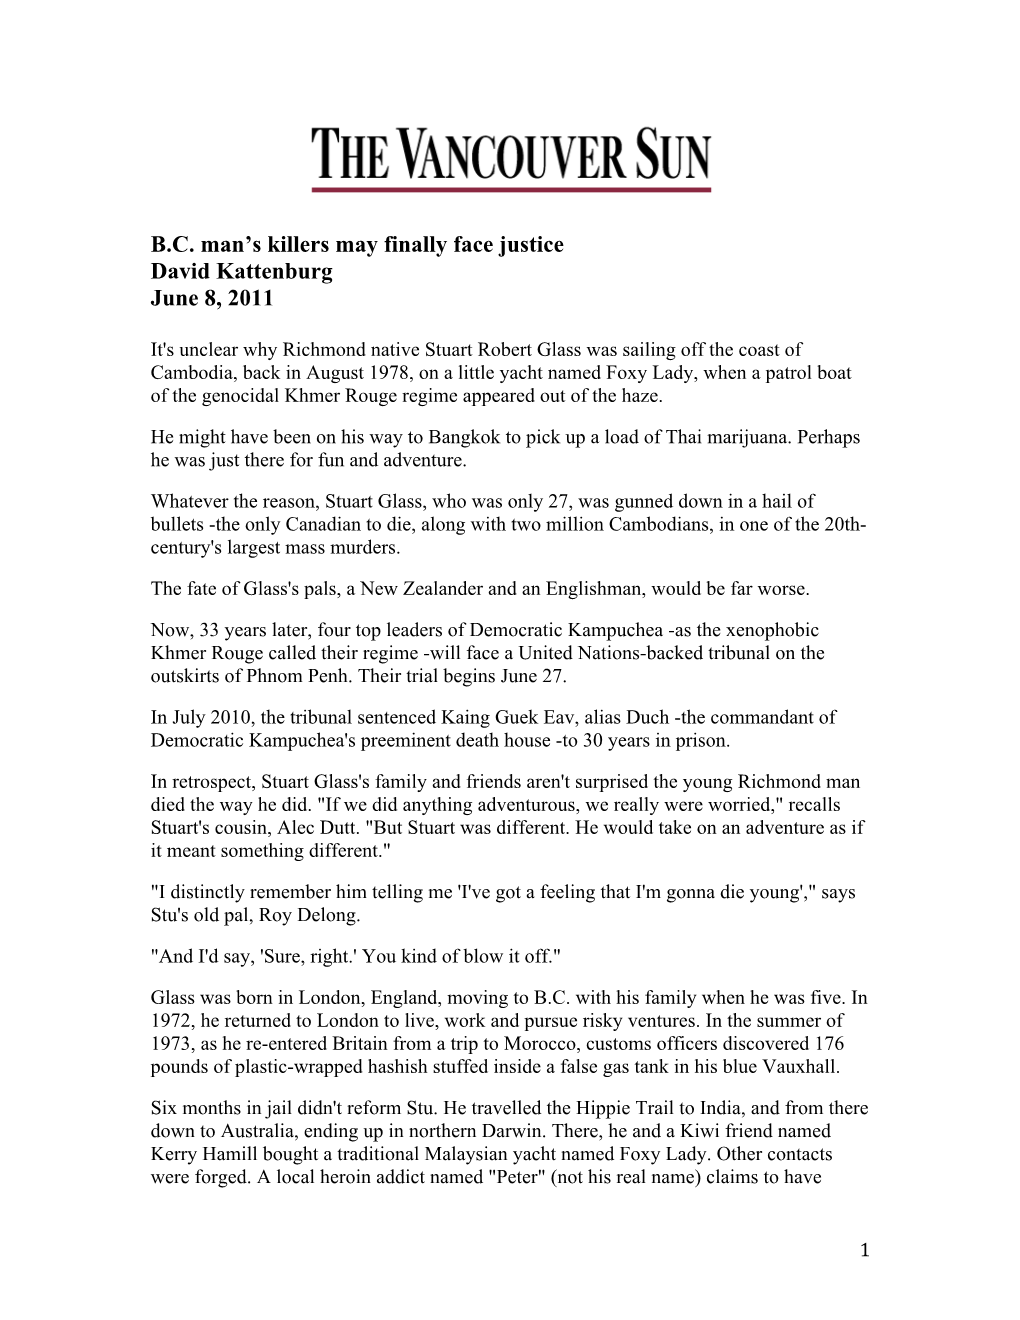 B.C. Man's Killers May Finally Face Justice David Kattenburg June 8, 2011